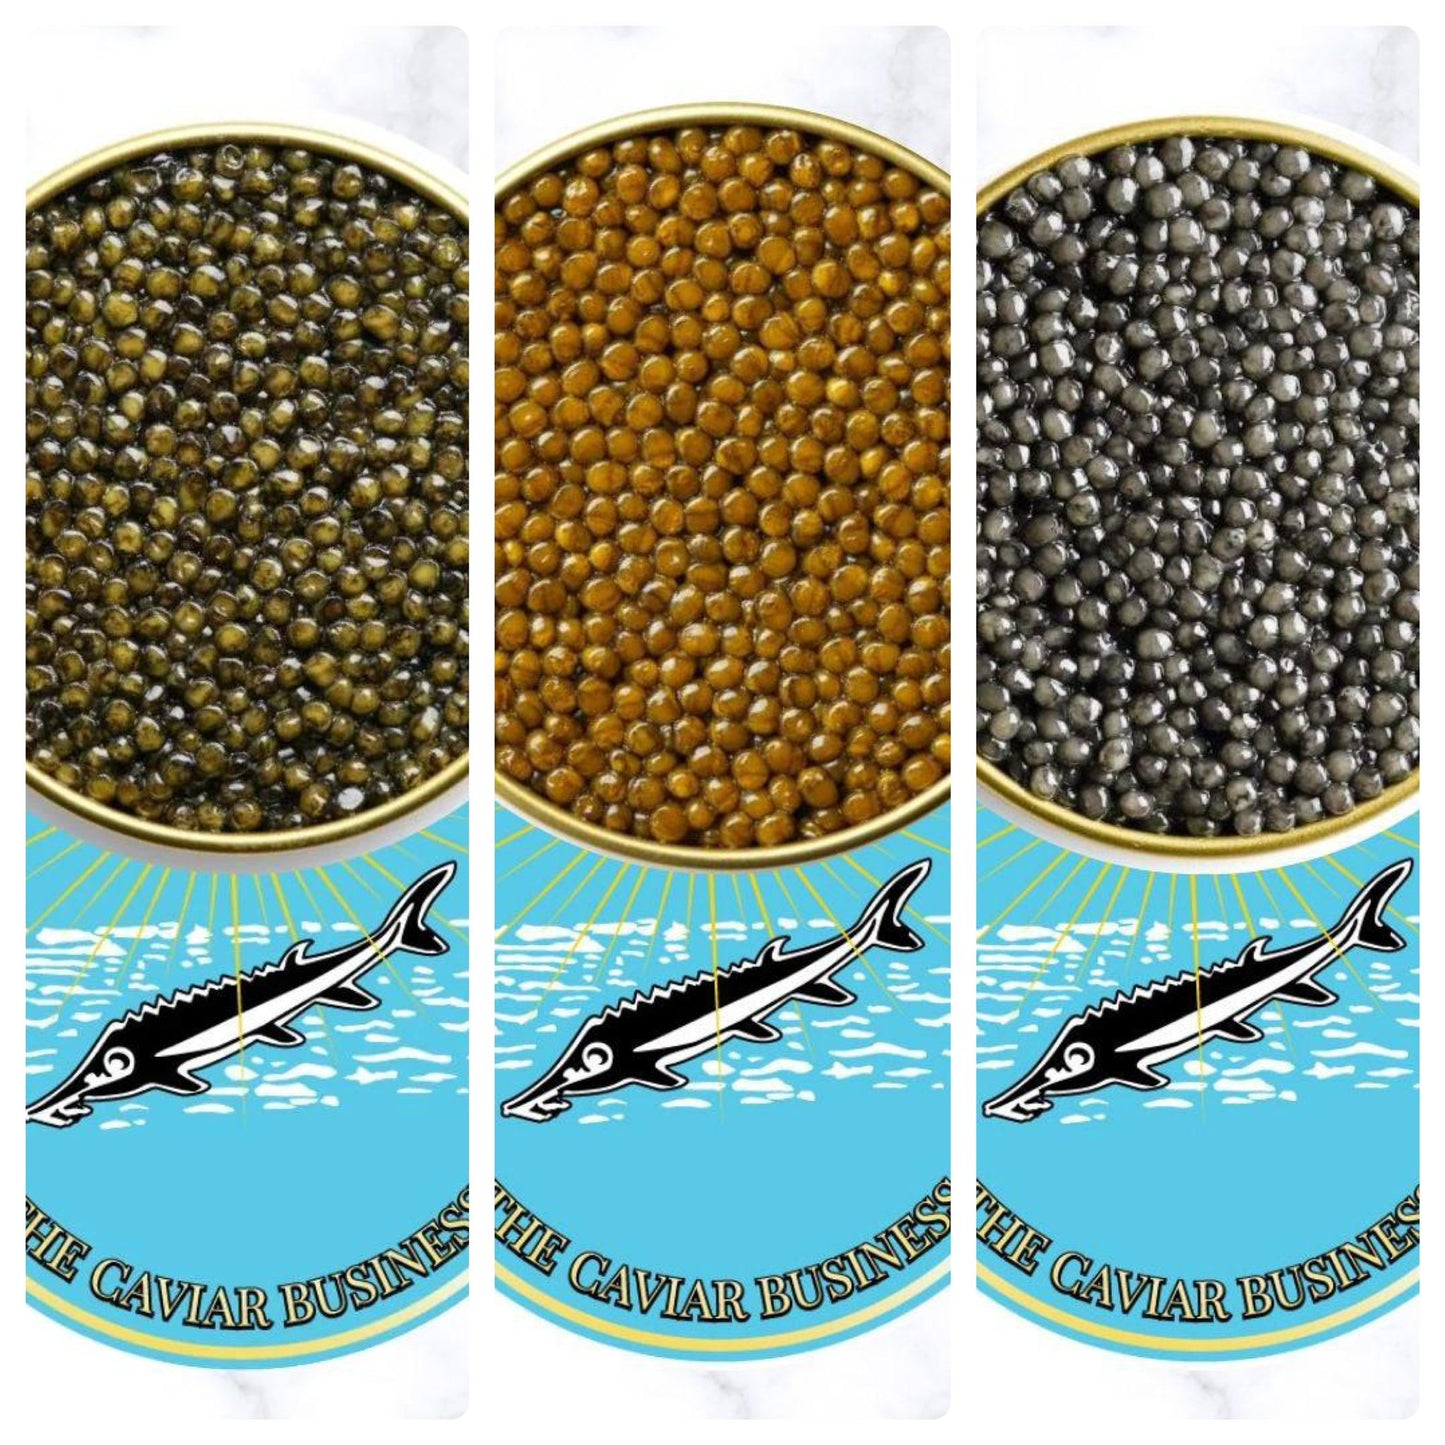 The Caviar Taster Set